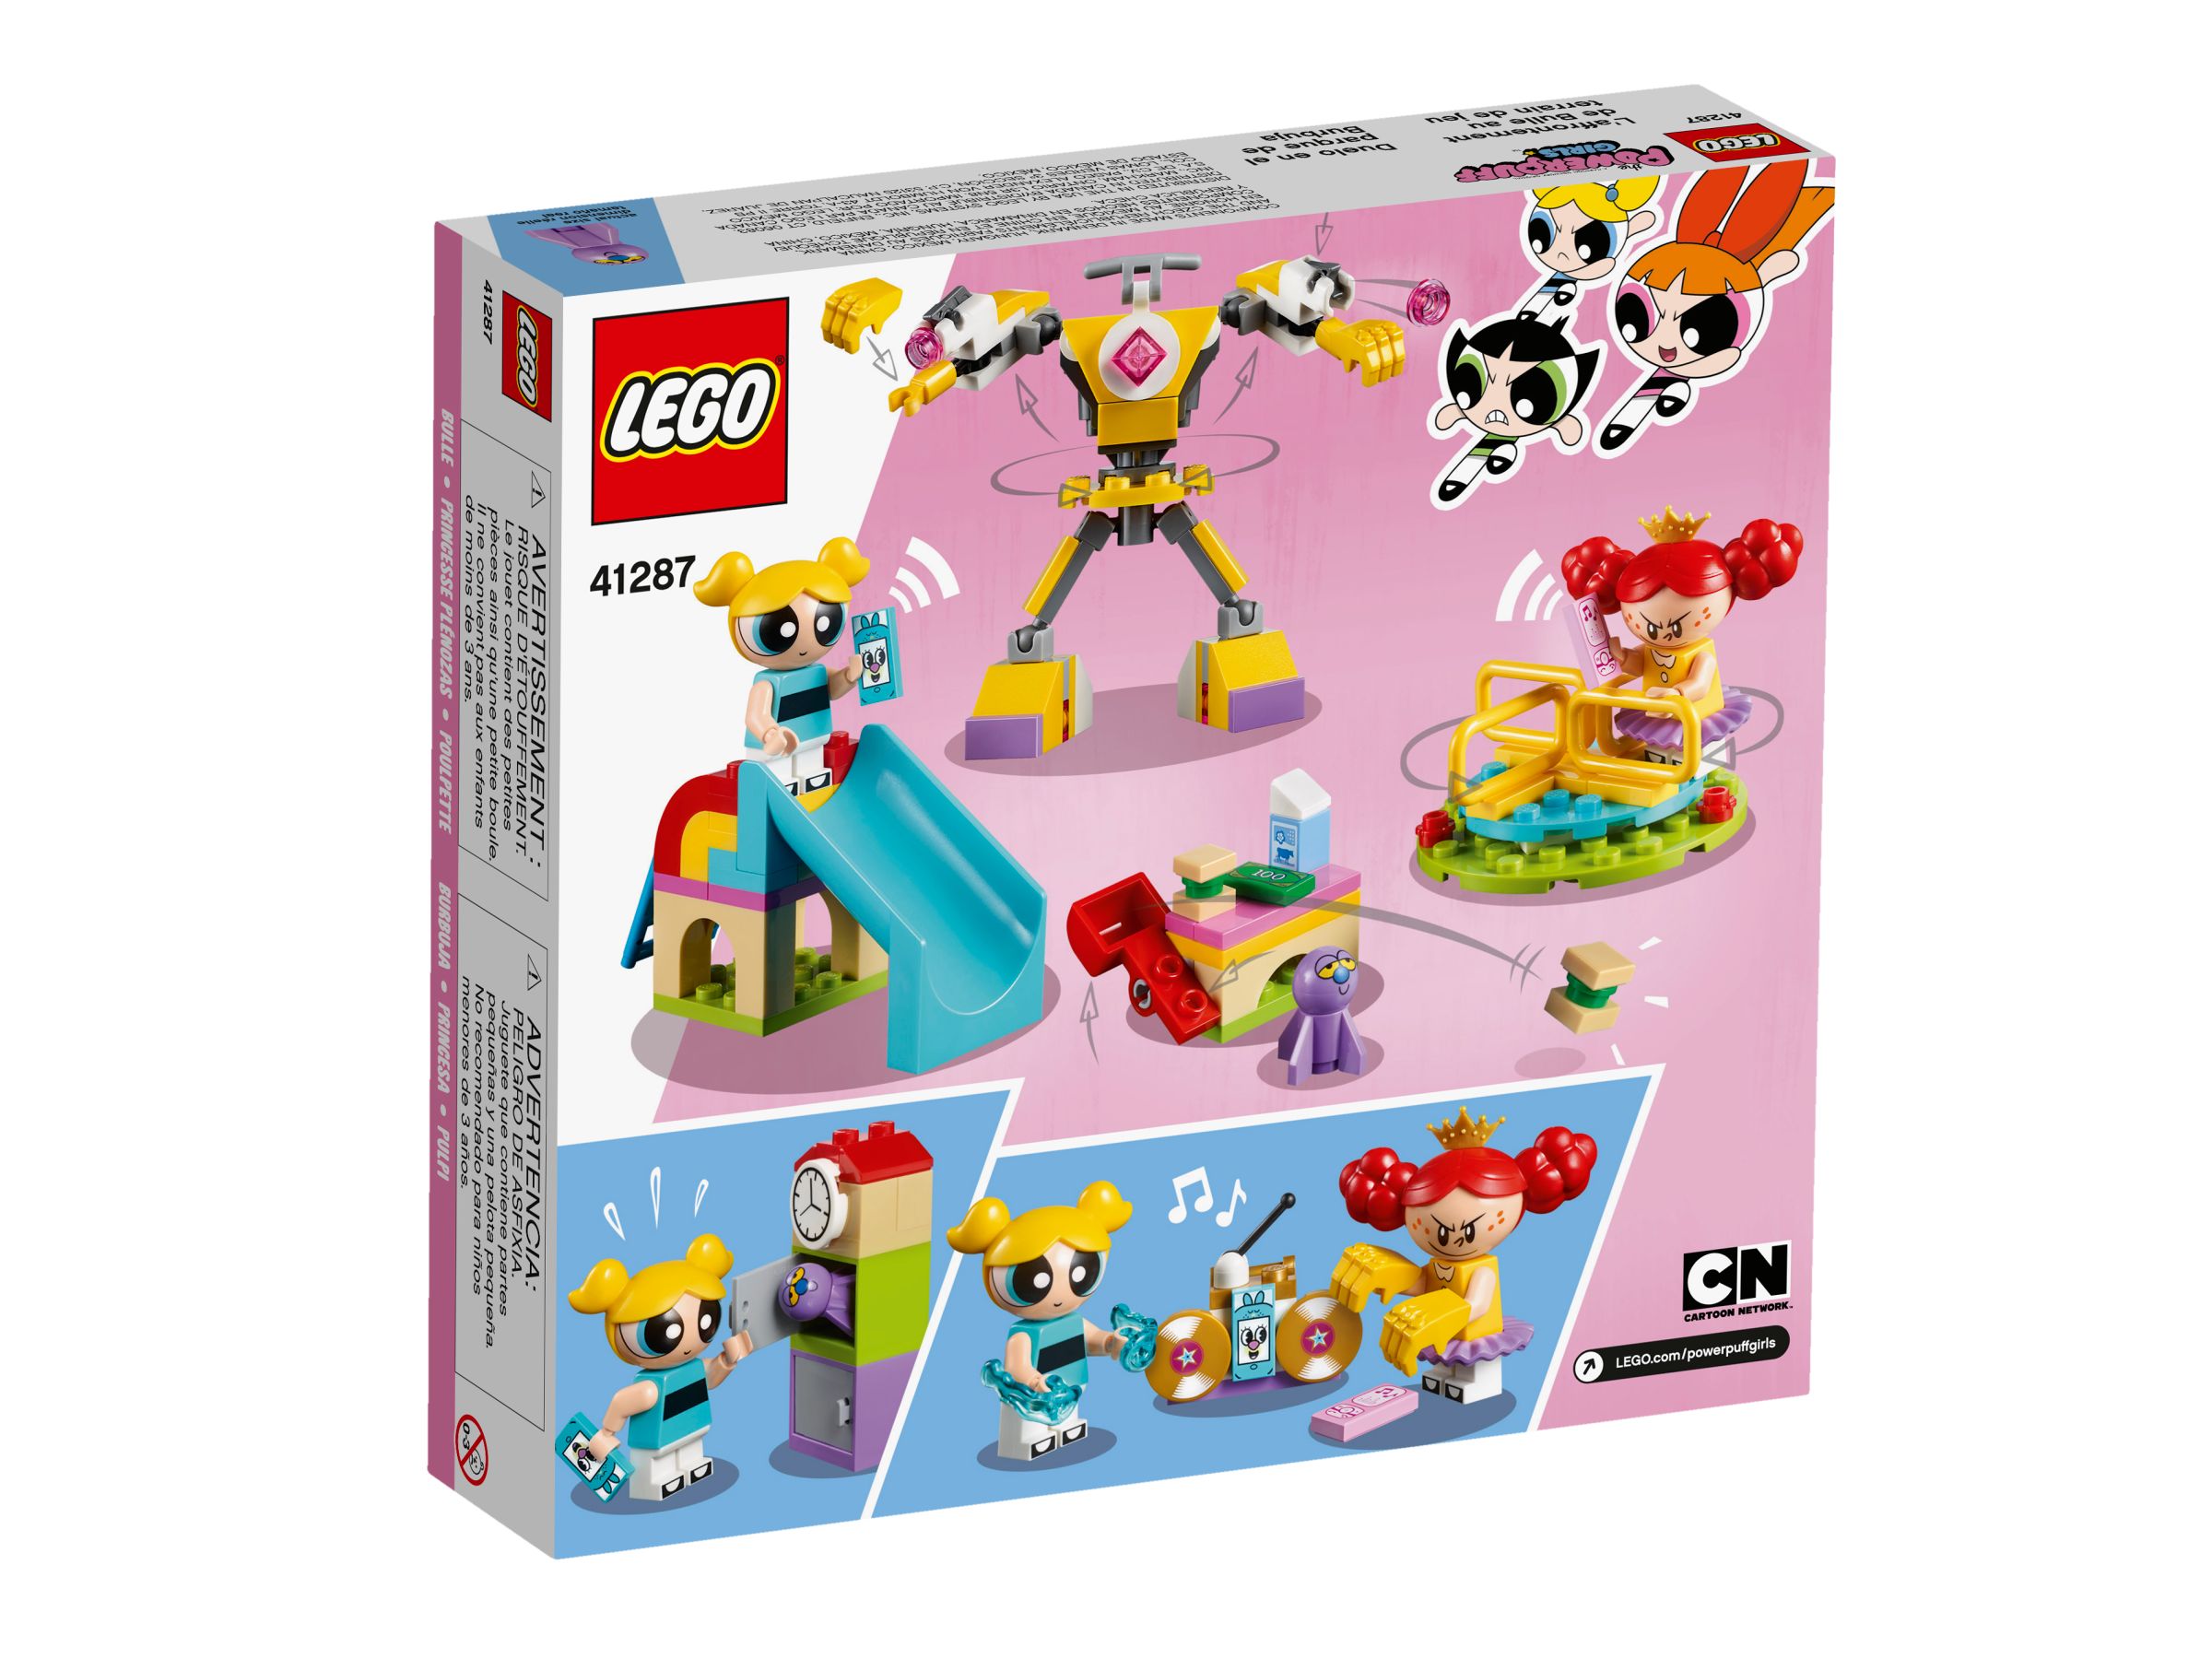 LEGO The Powerpuff Girls 41287 Bubbles' Spielplatzabenteuer LEGO_41287_alt6.jpg